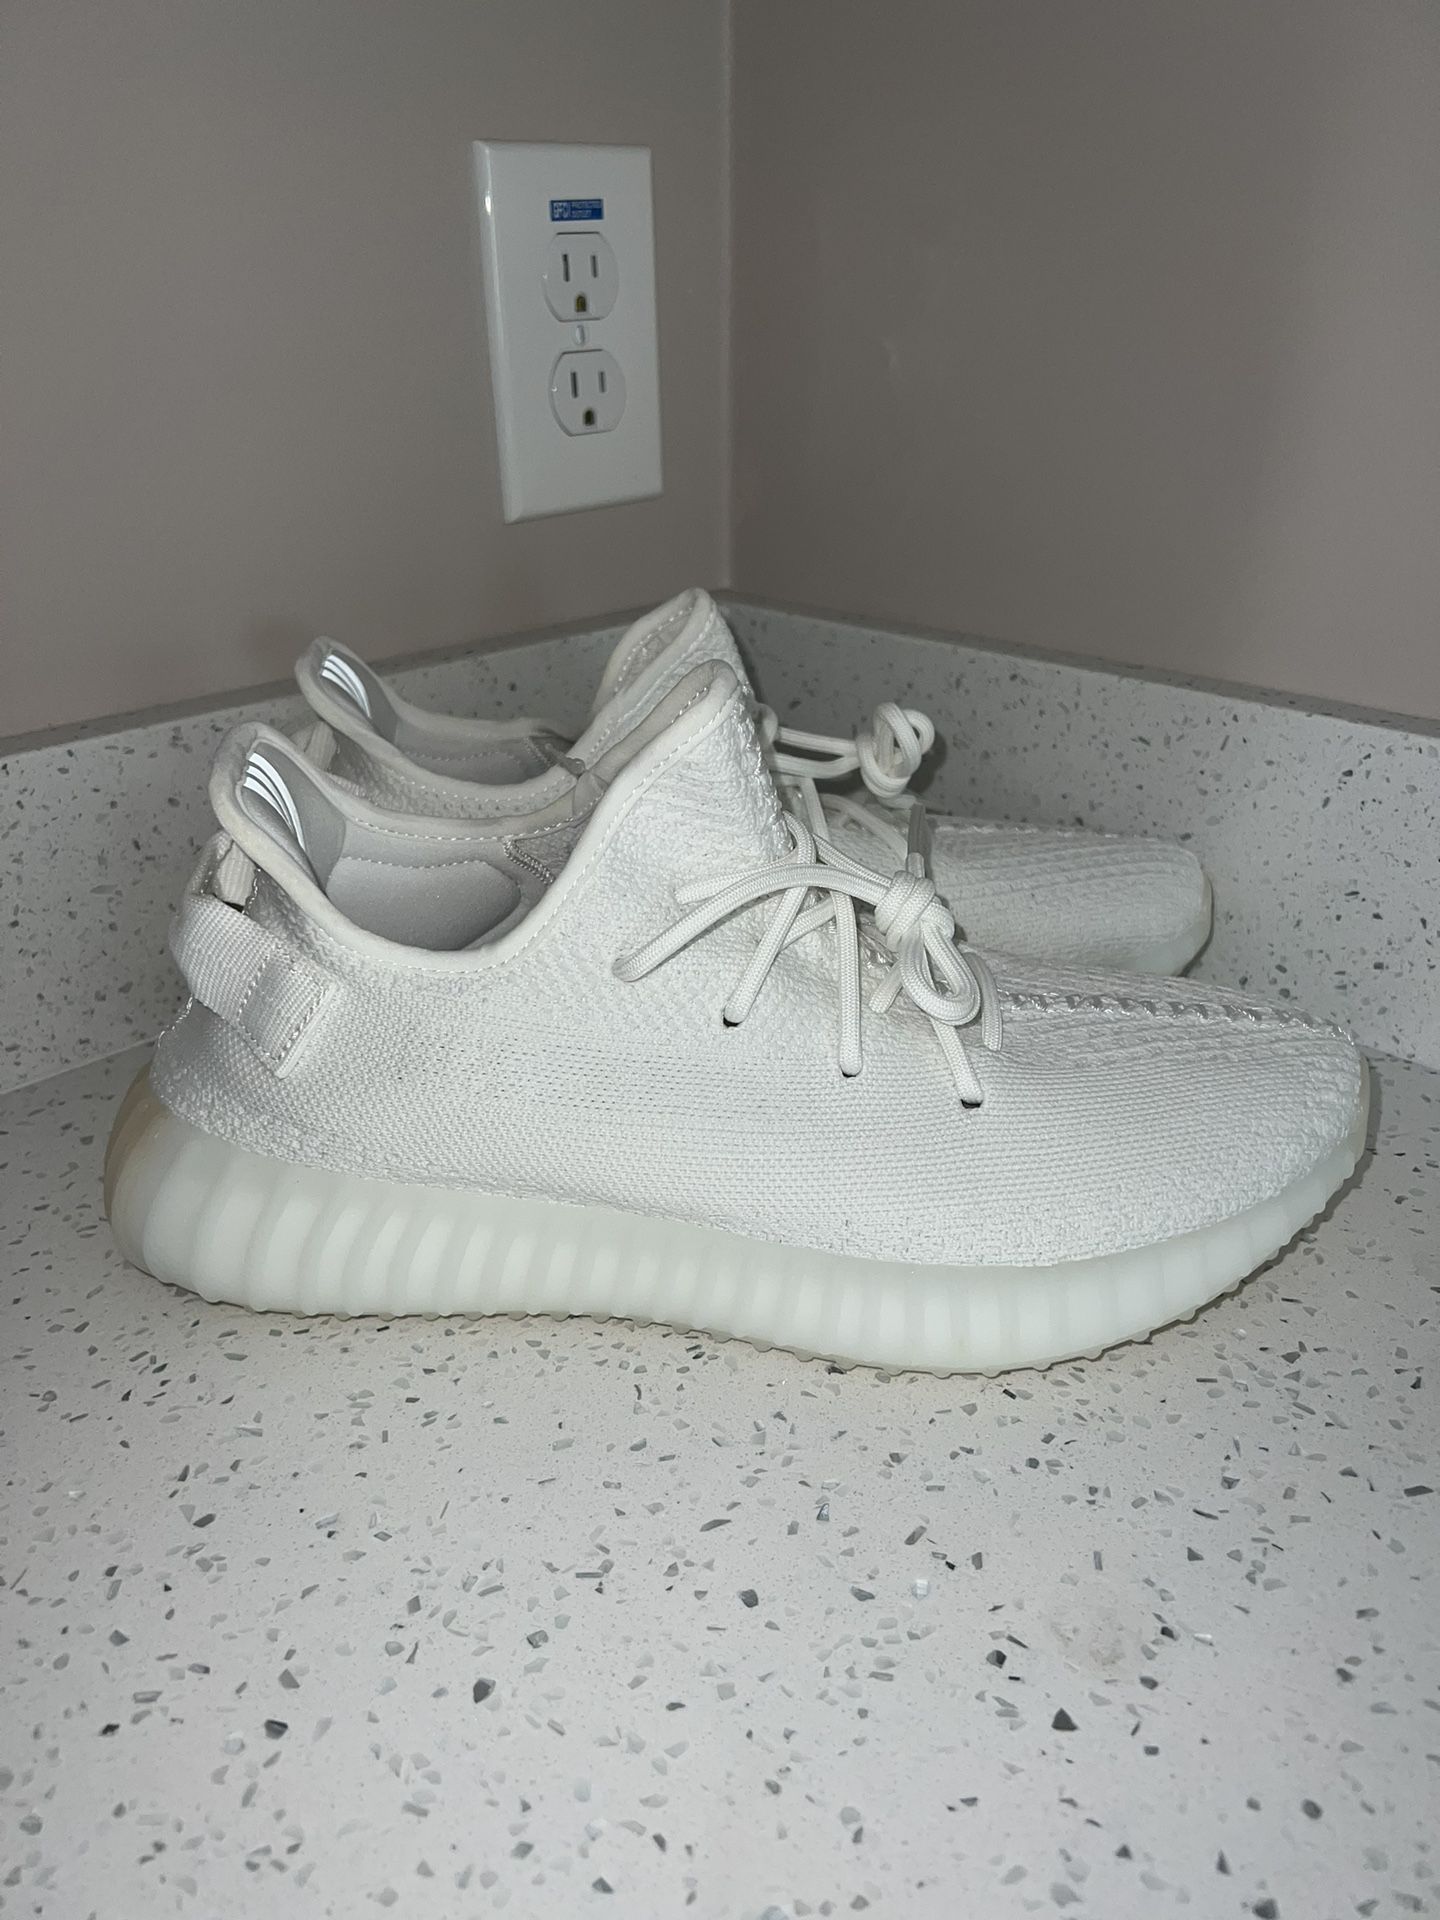 Adidas Yeezy Boost 350 V2 'Triple White' Shoes - 10